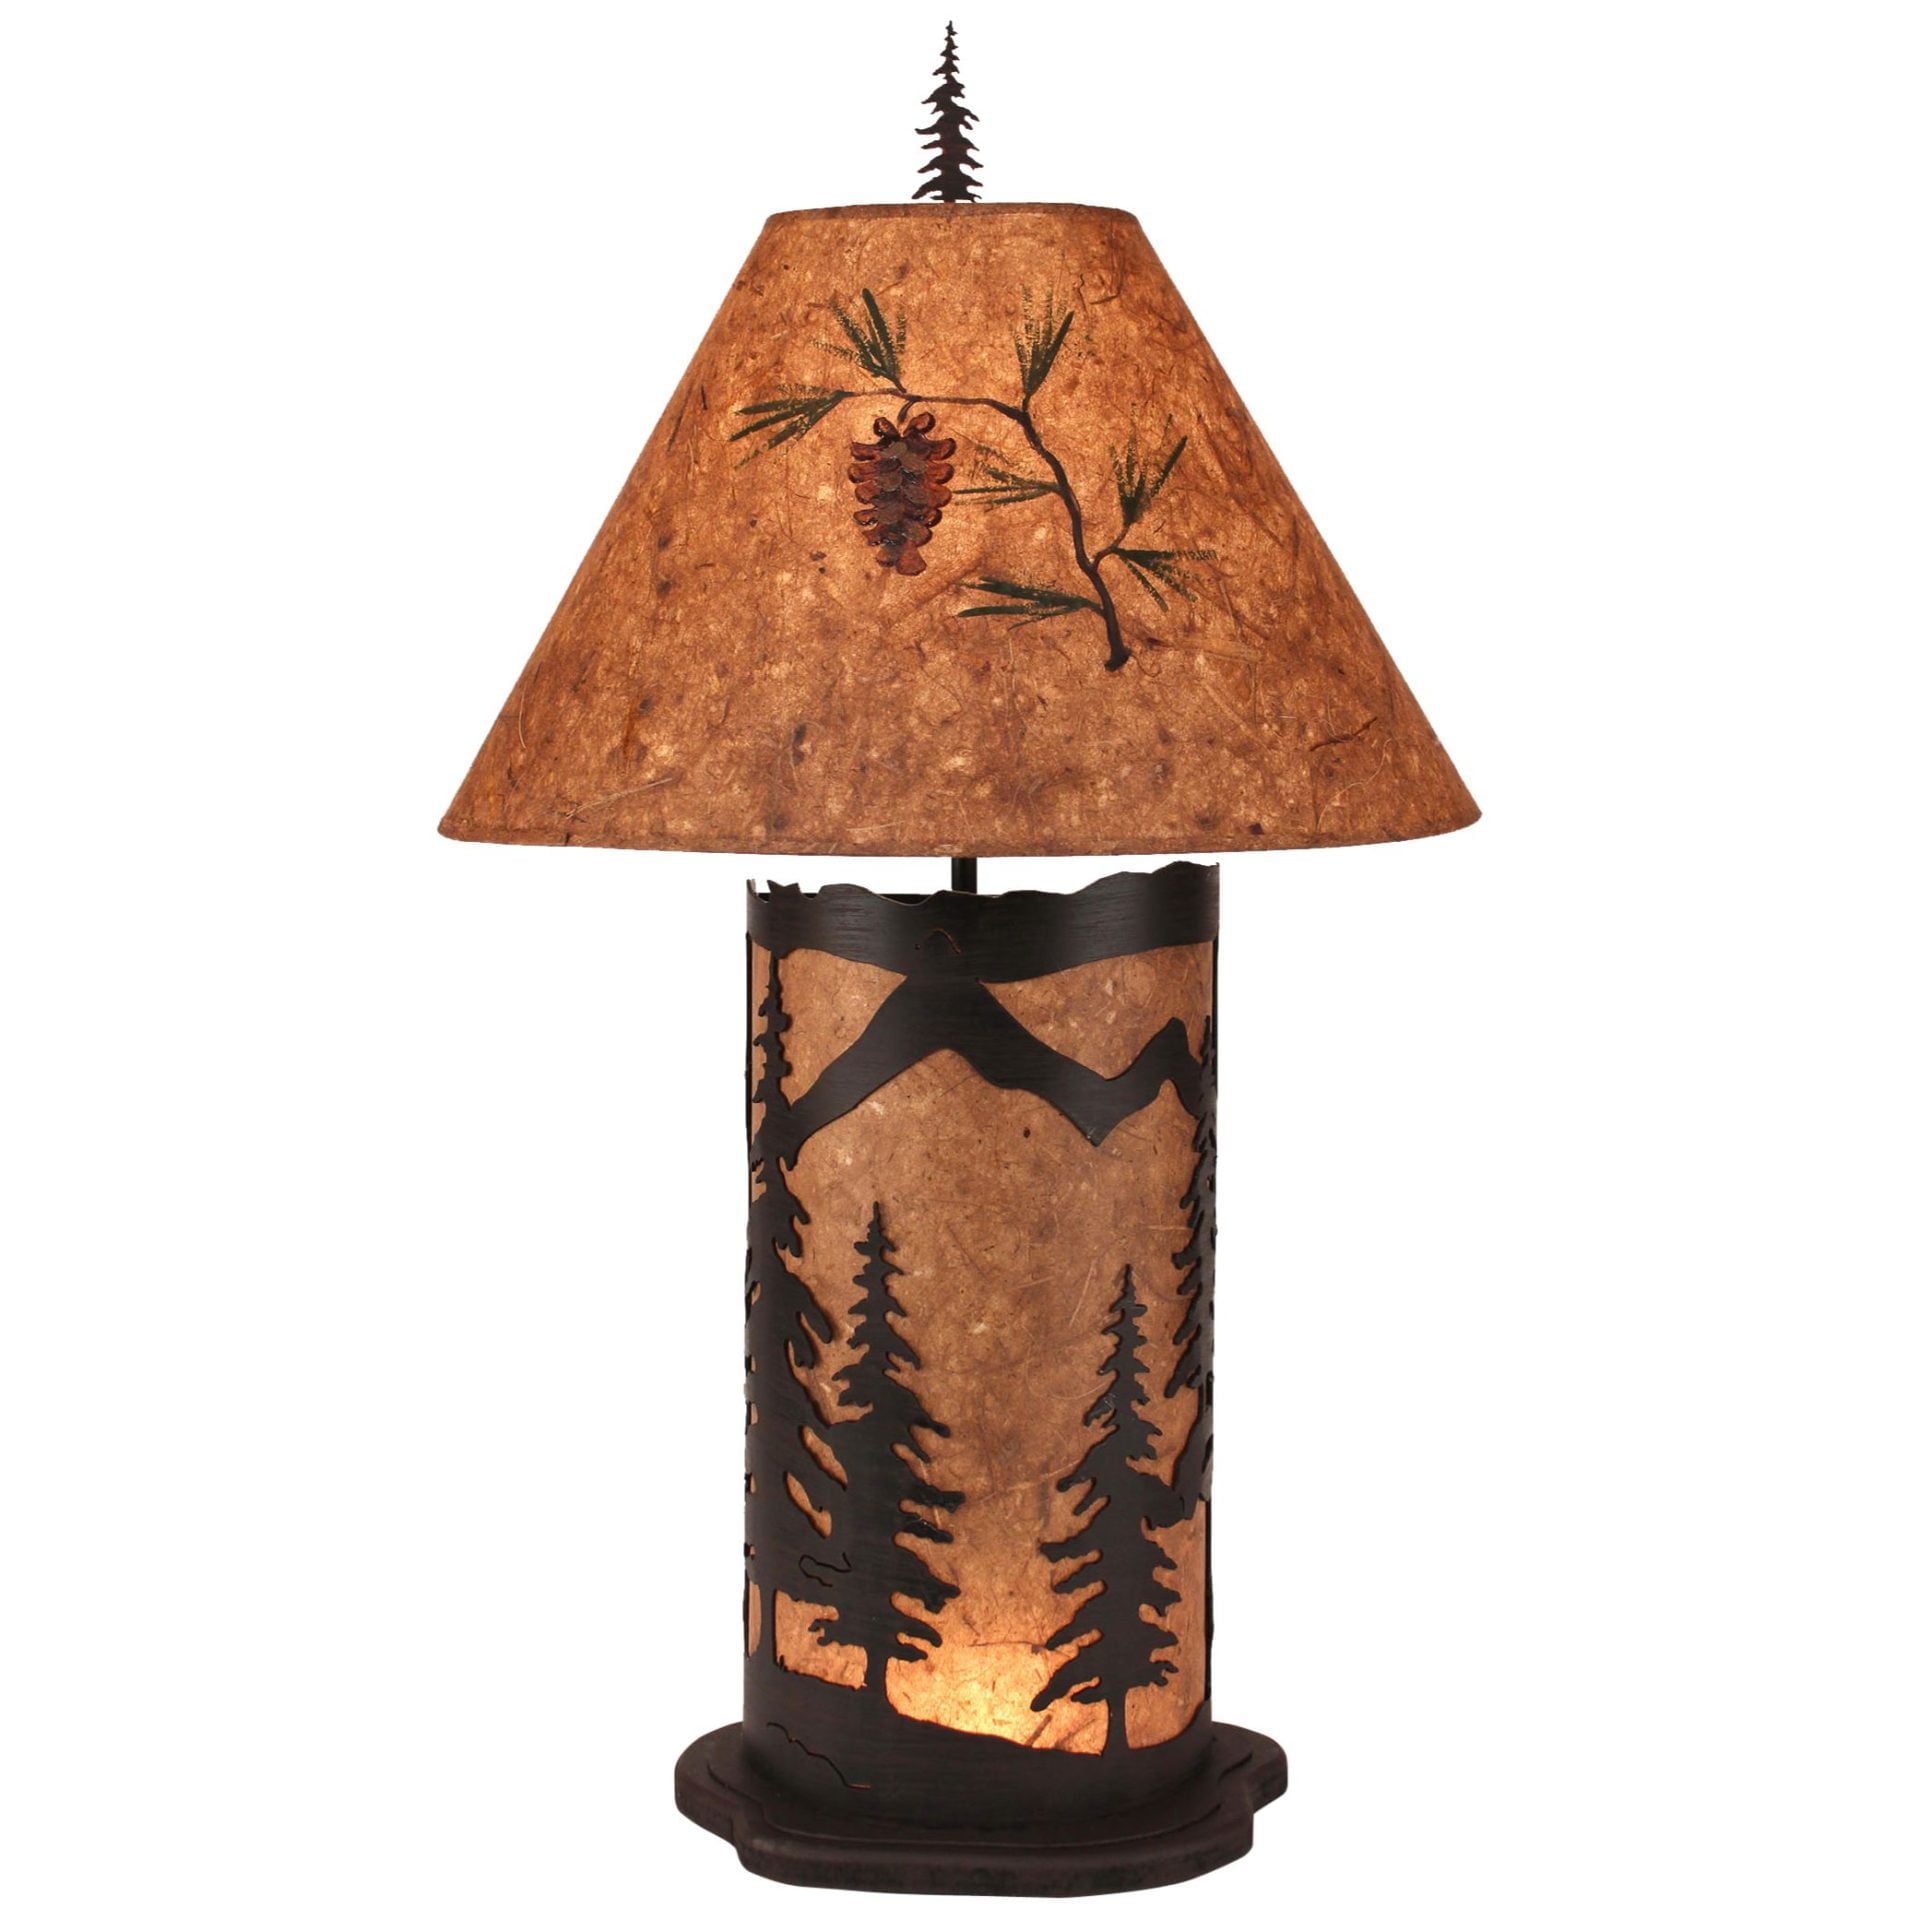 Large Rustic Scene Table Lamp with Nightlight